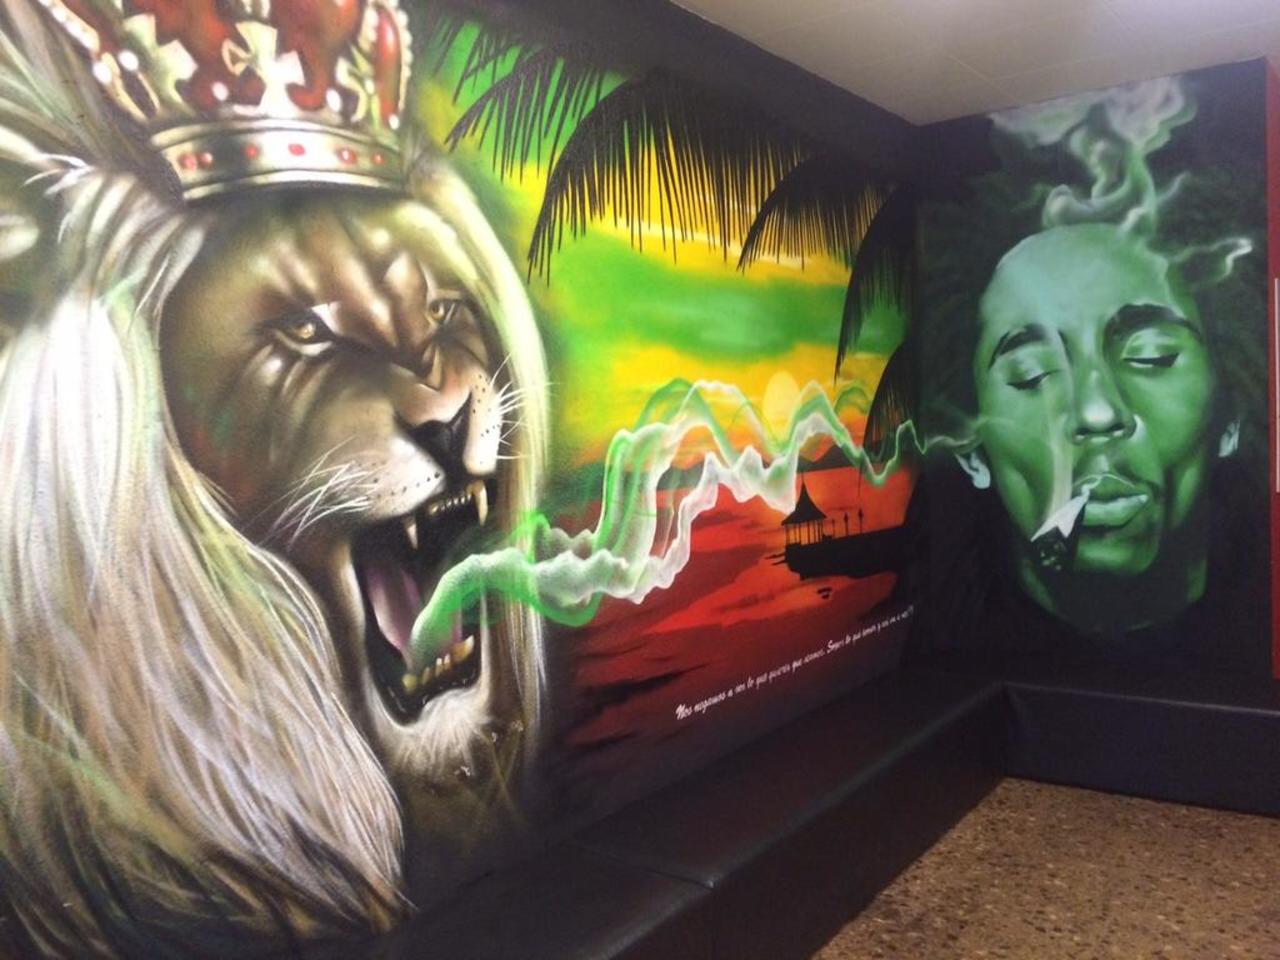 RT @Berokone: #graffiti  #leon #mural #cannabis #kingstone #berok #art #arts #dibujo #animal #urbanwalls #arteurbano #streetart http://t.co/VqgDVVxS3o